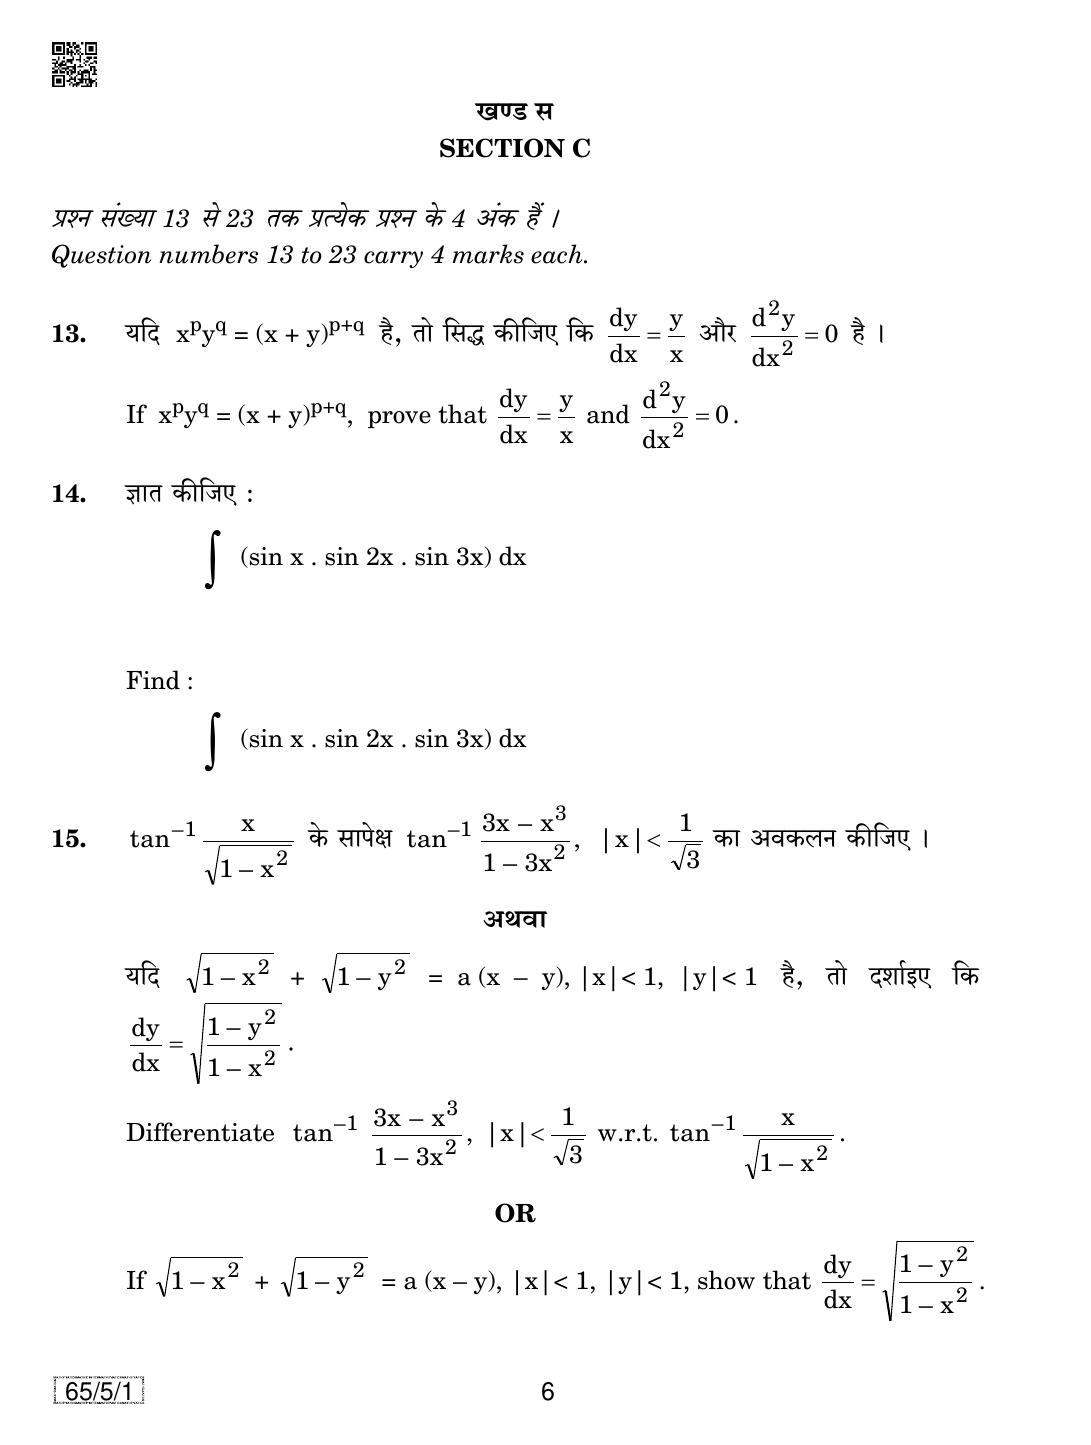 CBSE Class 12 65-5-1 Mathematics 2019 Question Paper - Page 6